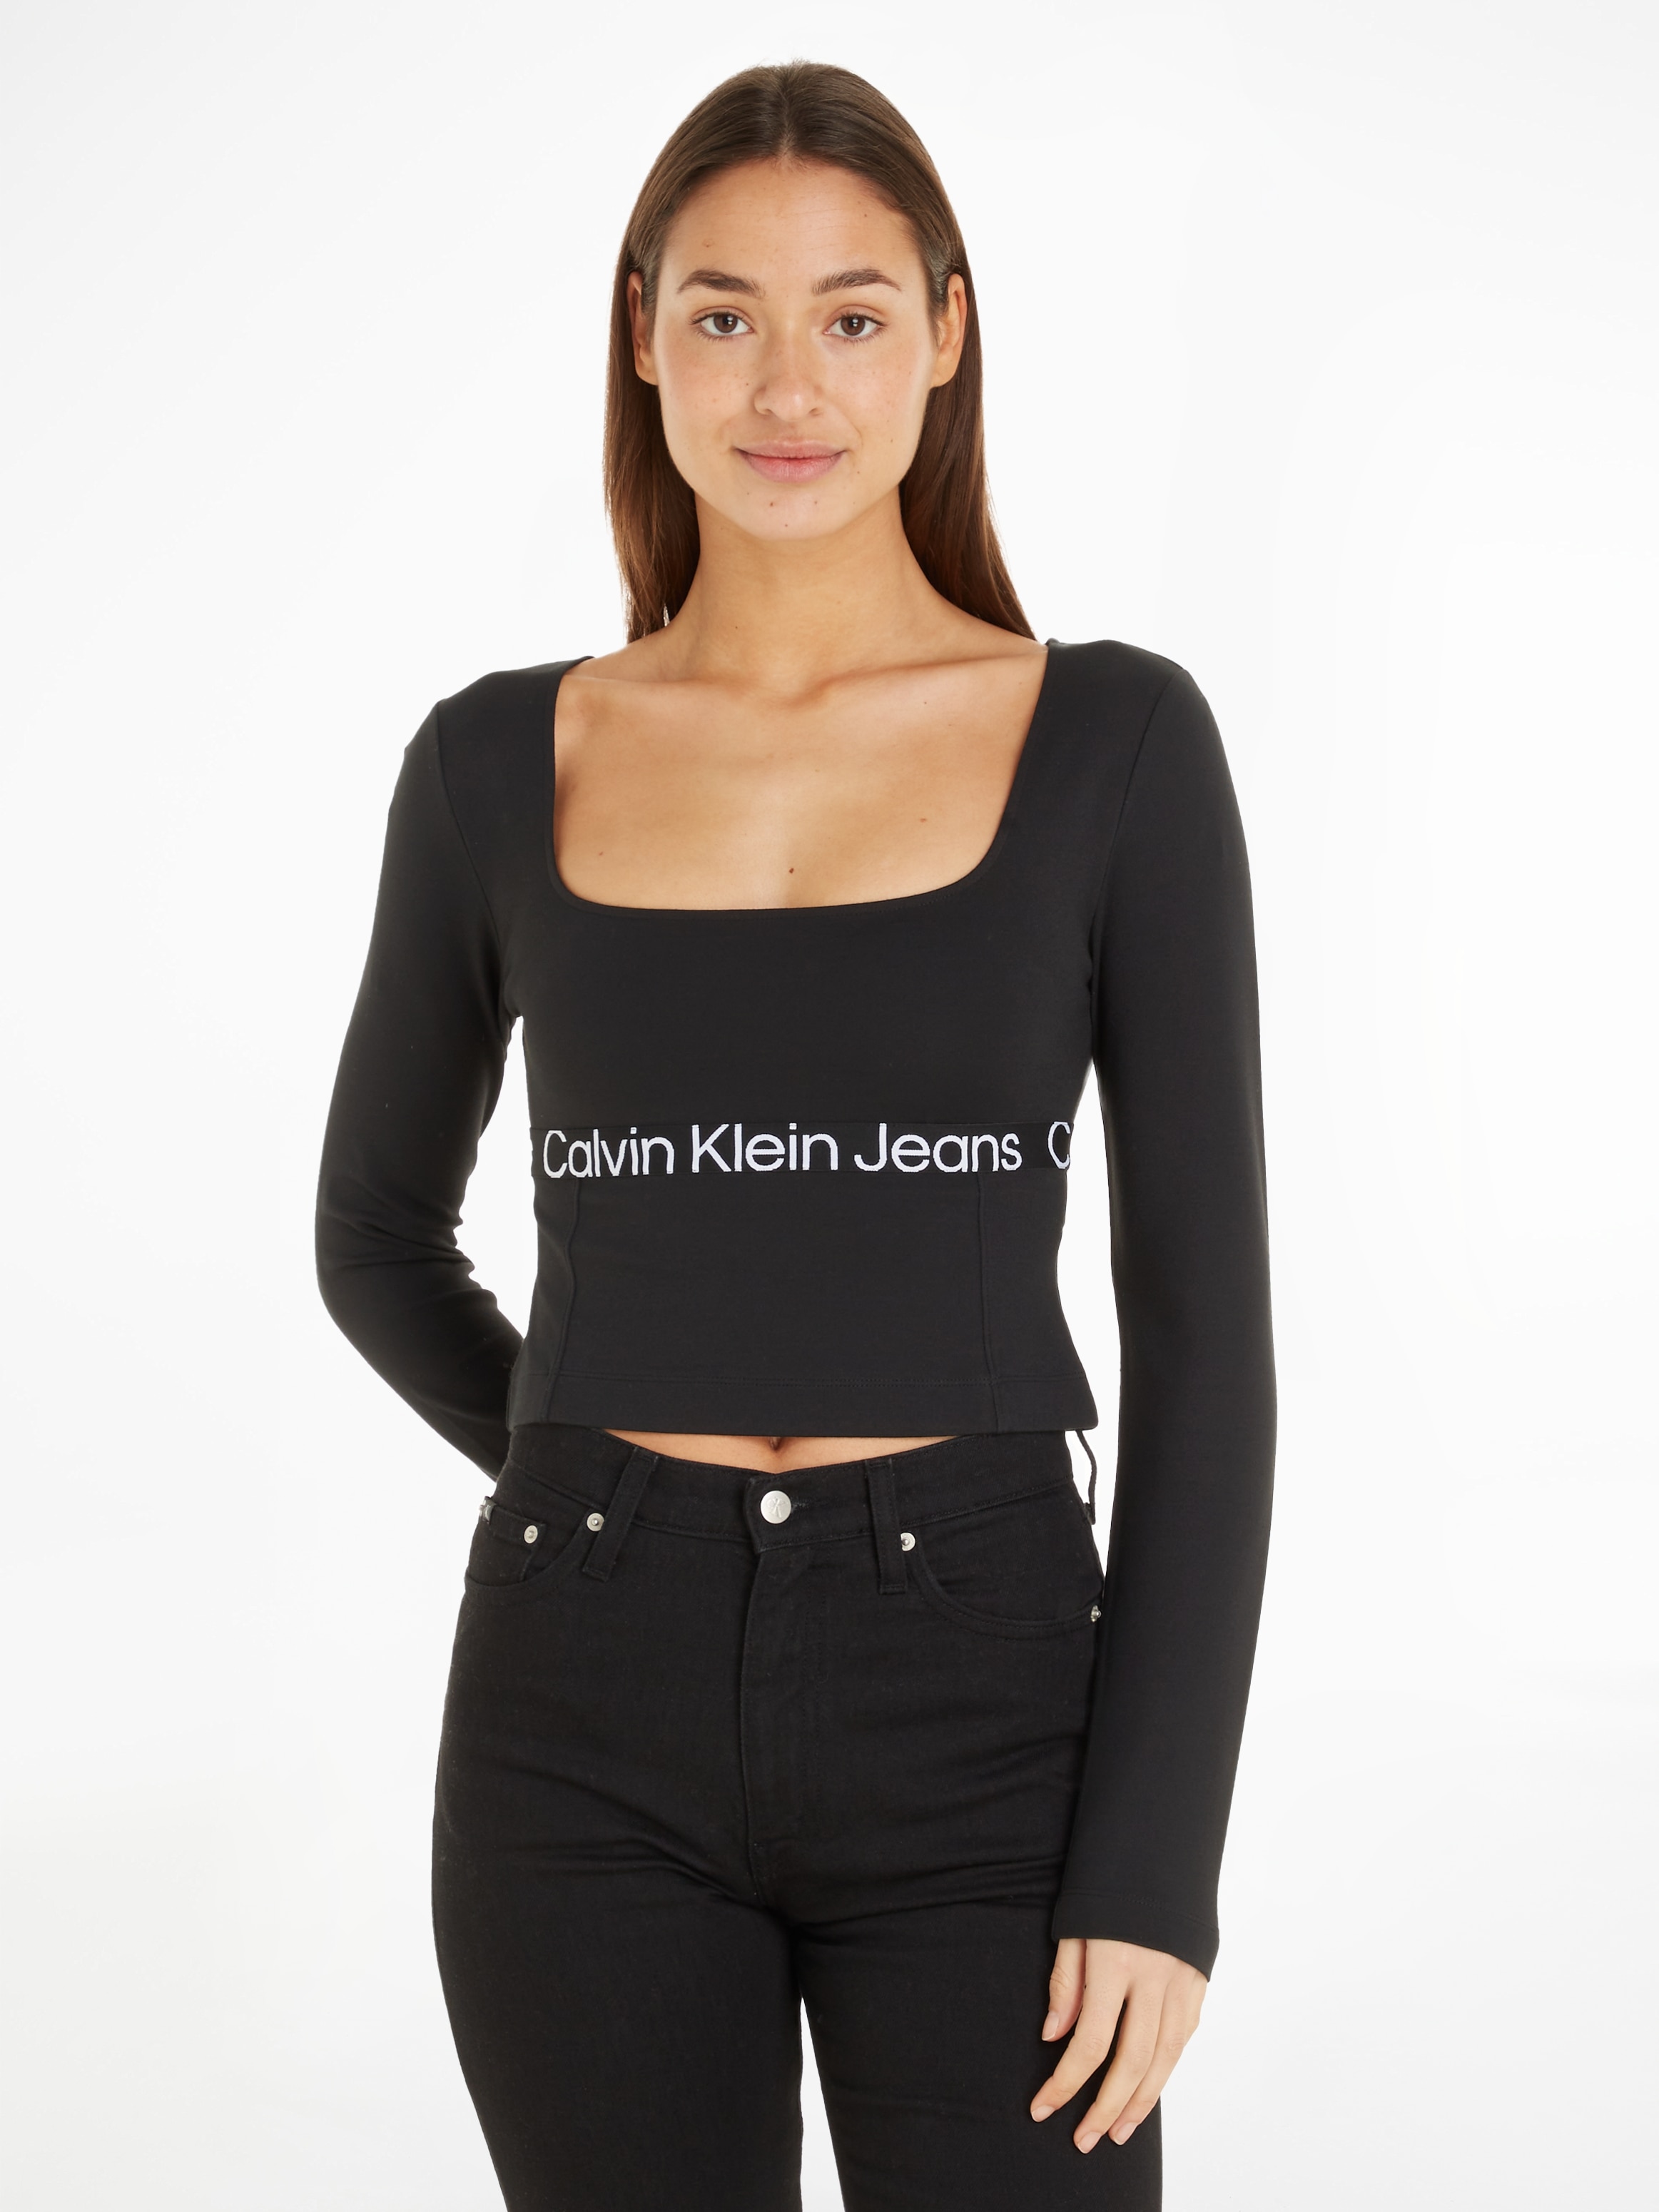 »LOGO Klein OTTO T-Shirt bei LS ELASTIC bestellen TOP« Jeans MILANO Calvin